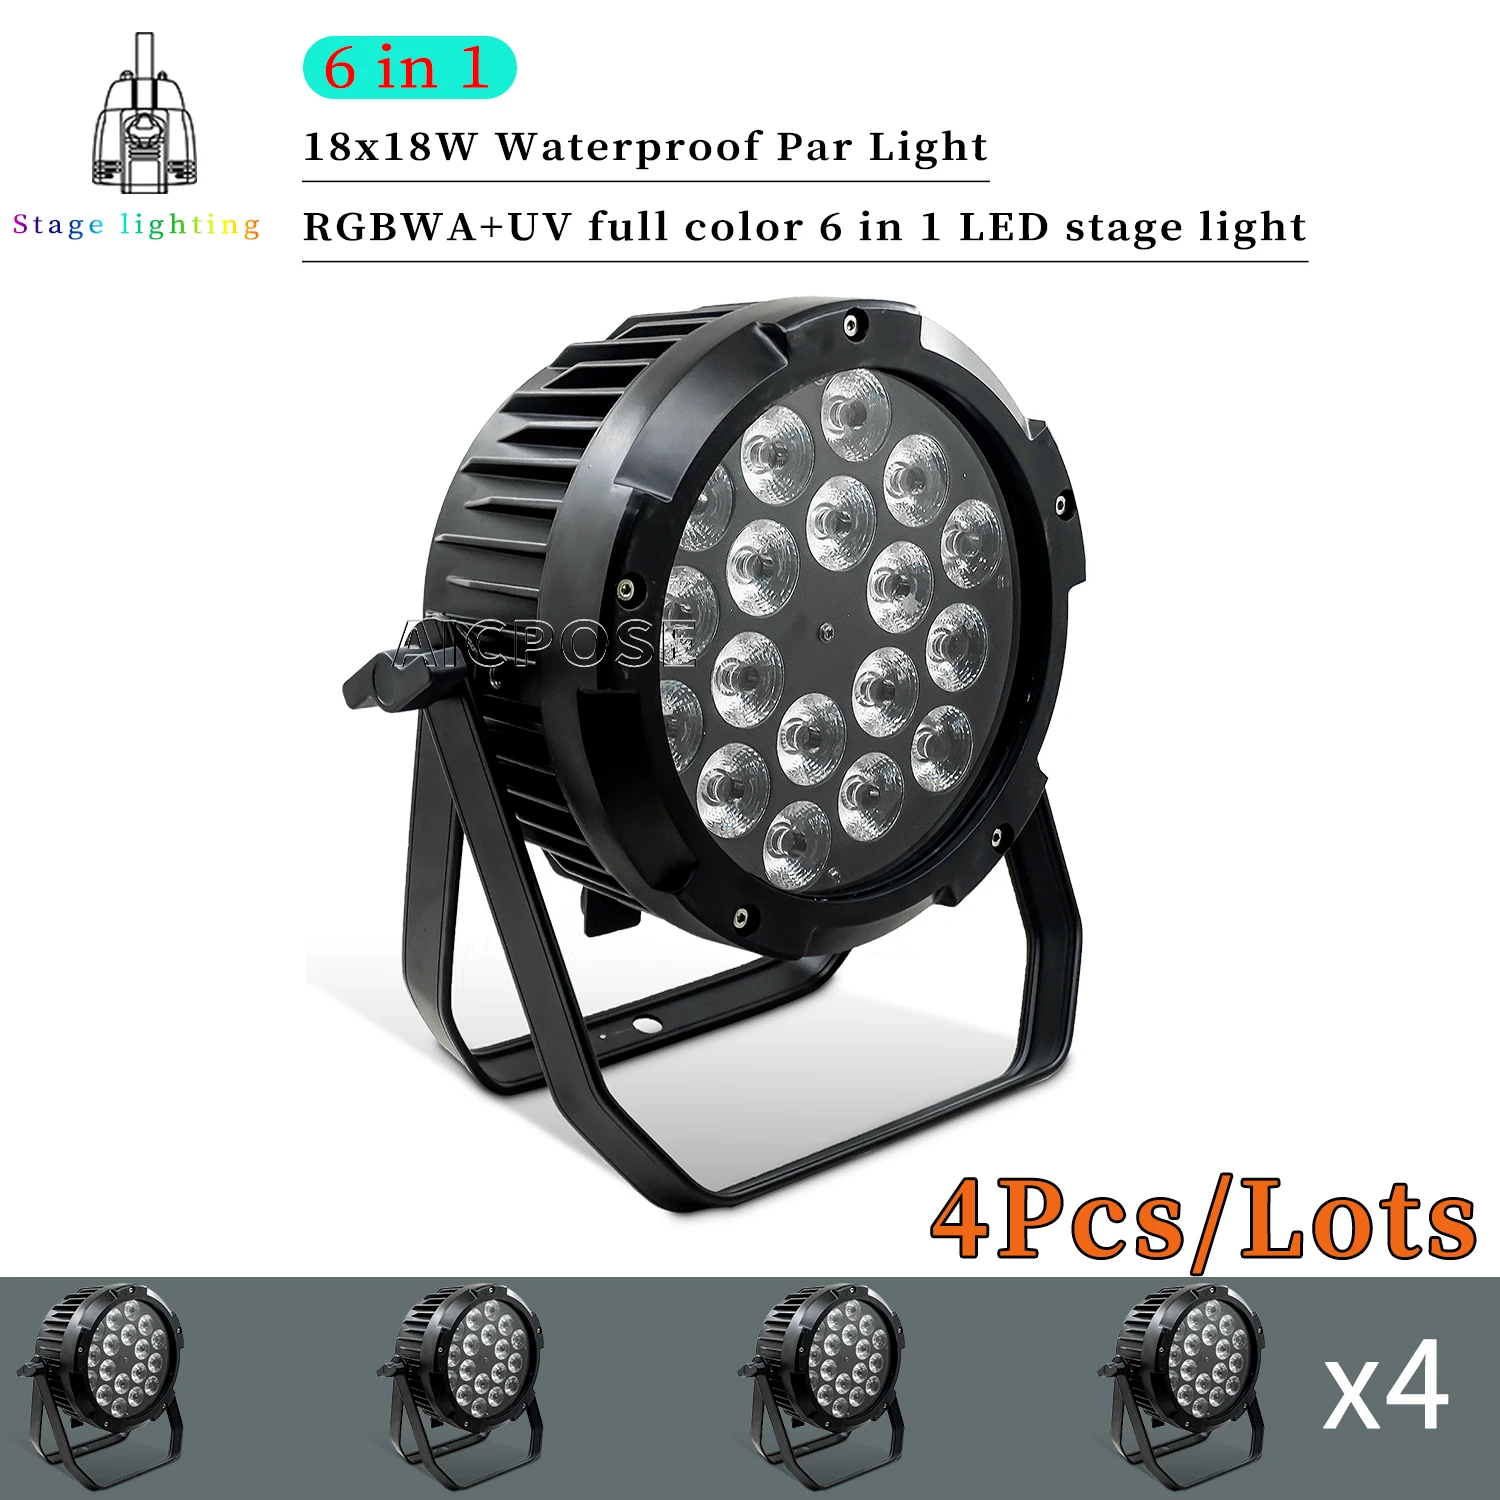 

4Pcs/Lots Outdoor Waterproof Stage Light 18x12W RGBW/18x18W RGBWA+UV 6-in-1 LED Par Light DMX Control DJ Disco Stage Equipment